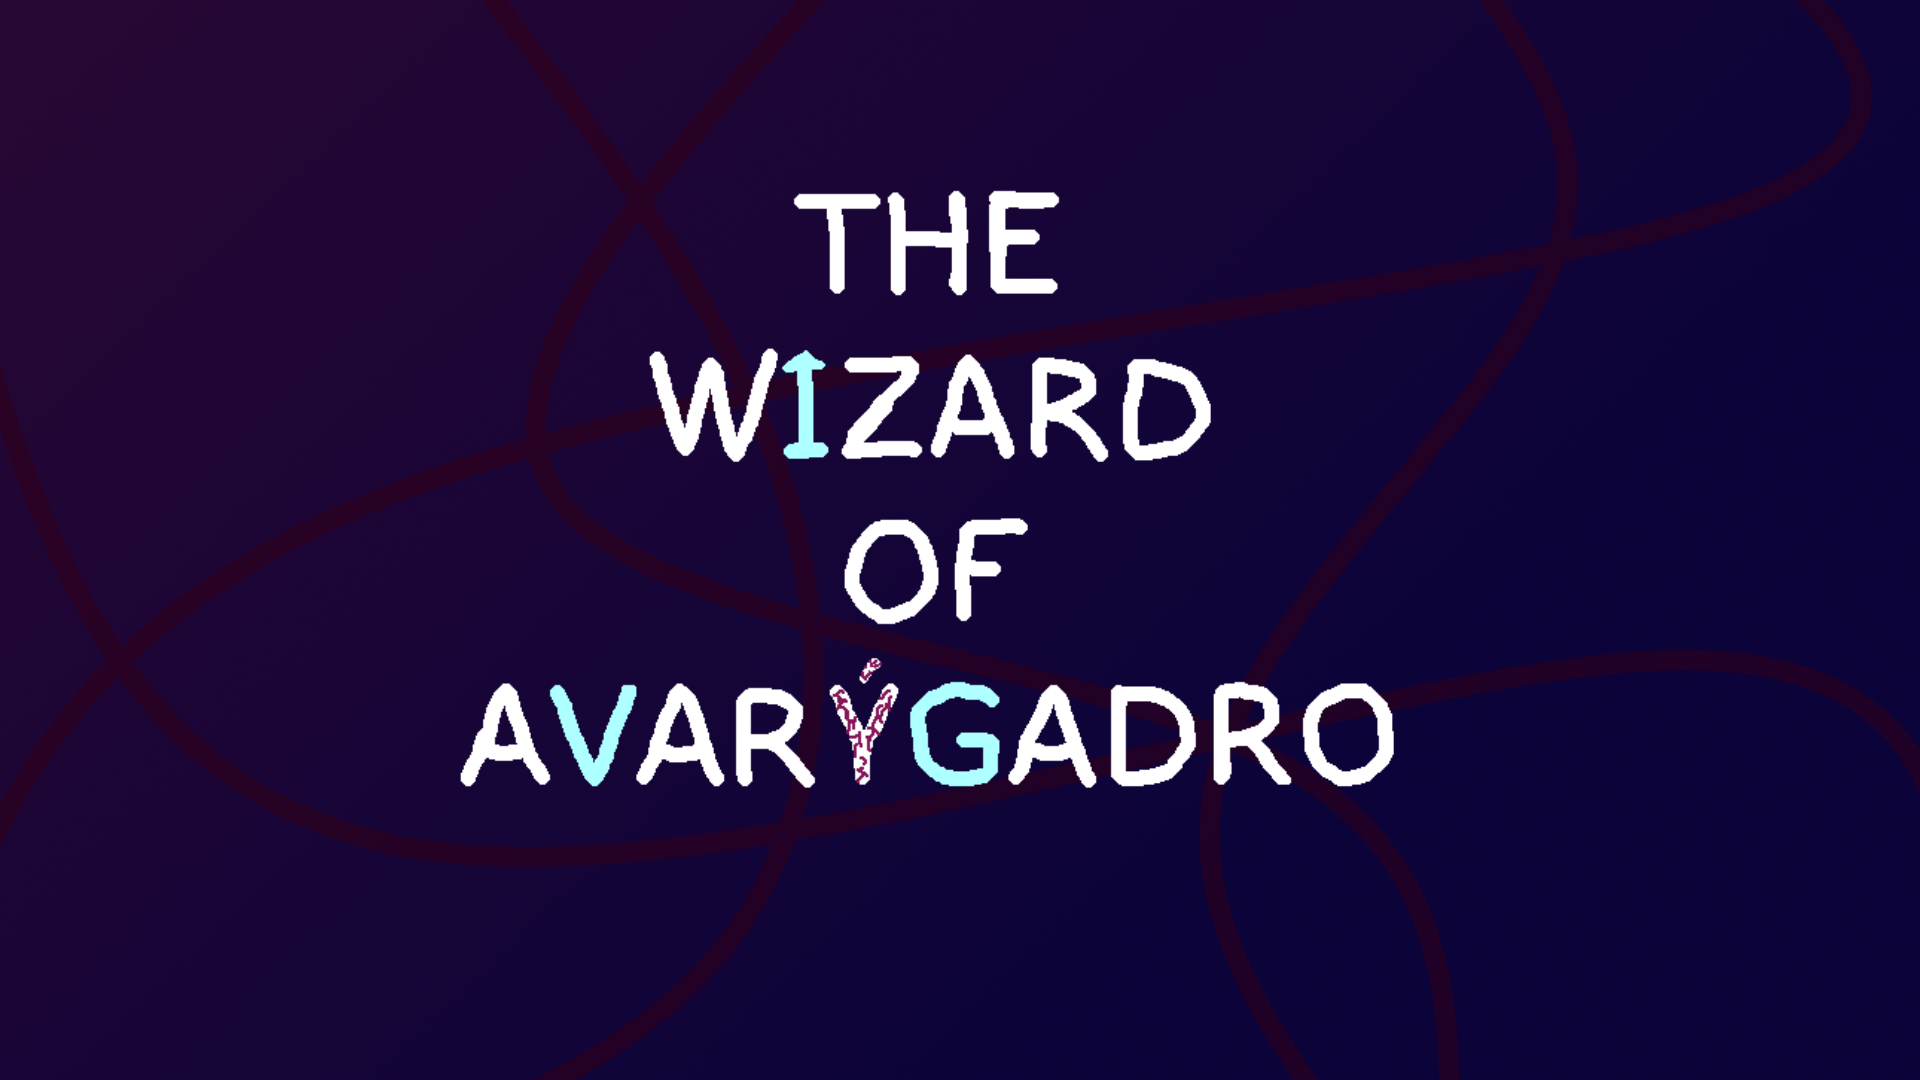 The Wizard of Avarygardo